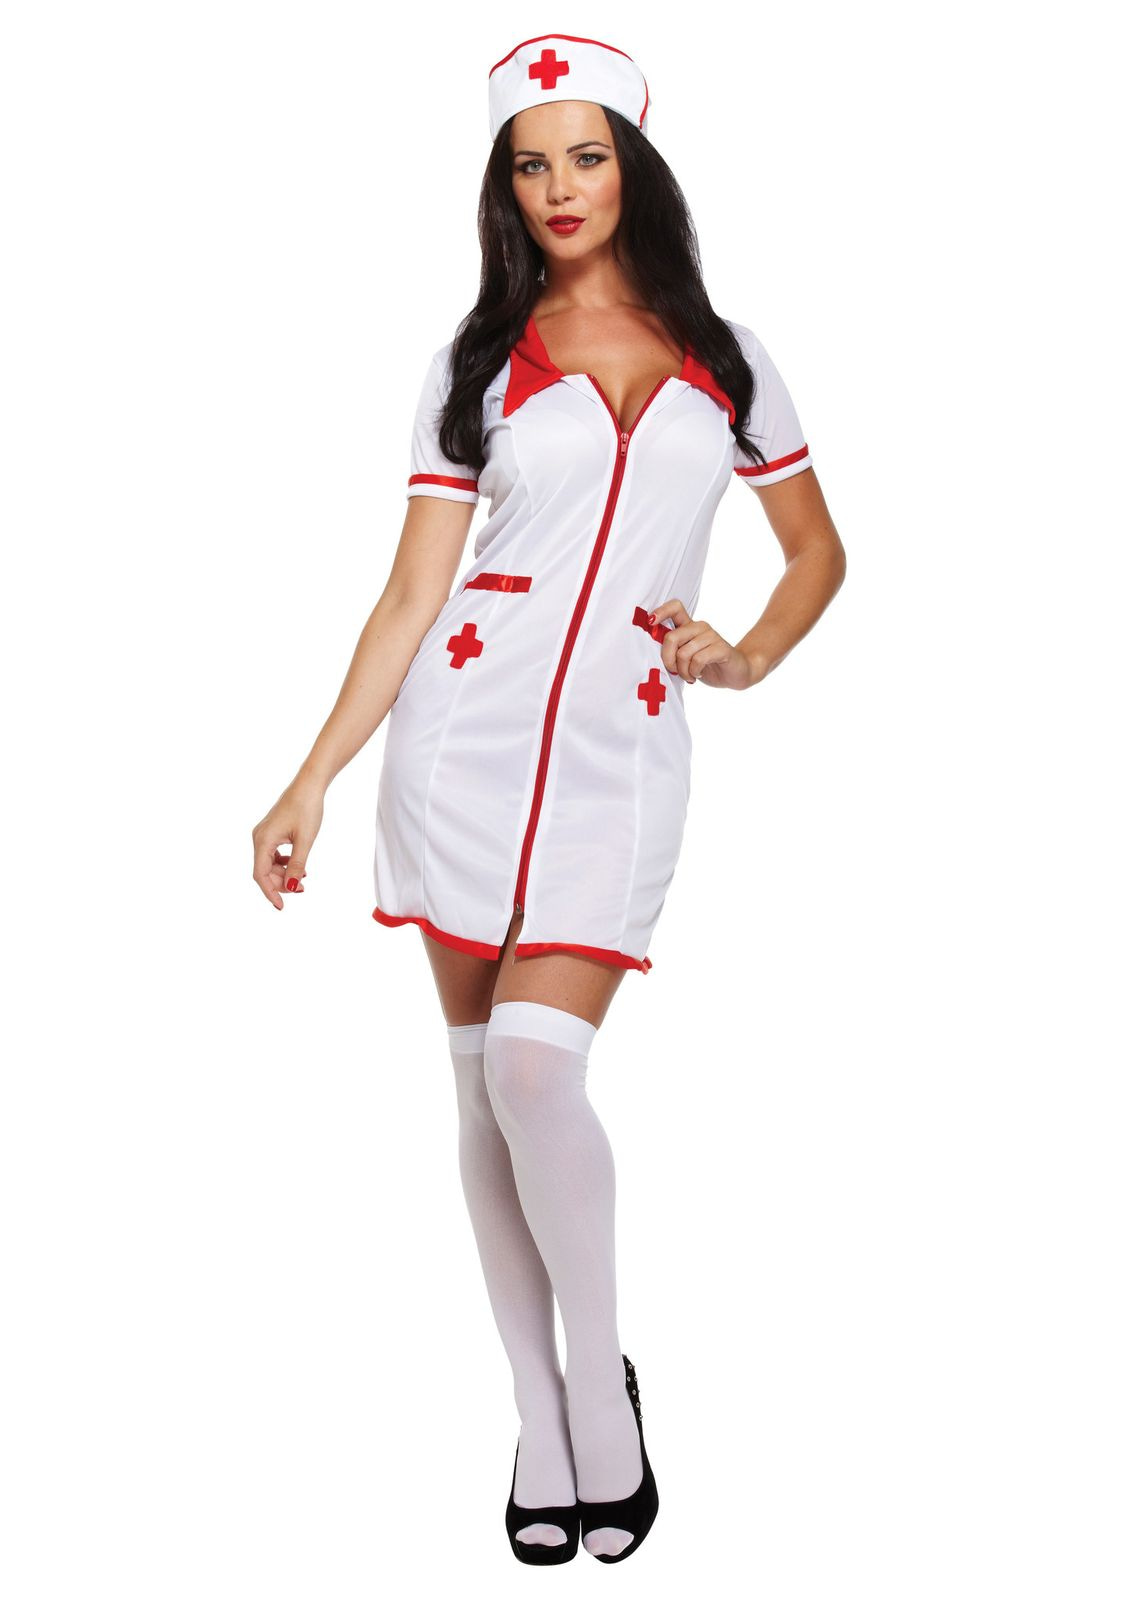 HENBRANDTVOLWASSENEN DAMES Sexy Verpleegster Kostuum | Zuster | Zuster pak | Carnavalskleding | Verkleedkleding / Feest Kostuum| Vrouw | ONZE - M/L 𝕍𝕖𝕣𝕜𝕠𝕠𝕡 ✪ 𝕔𝕠𝕞